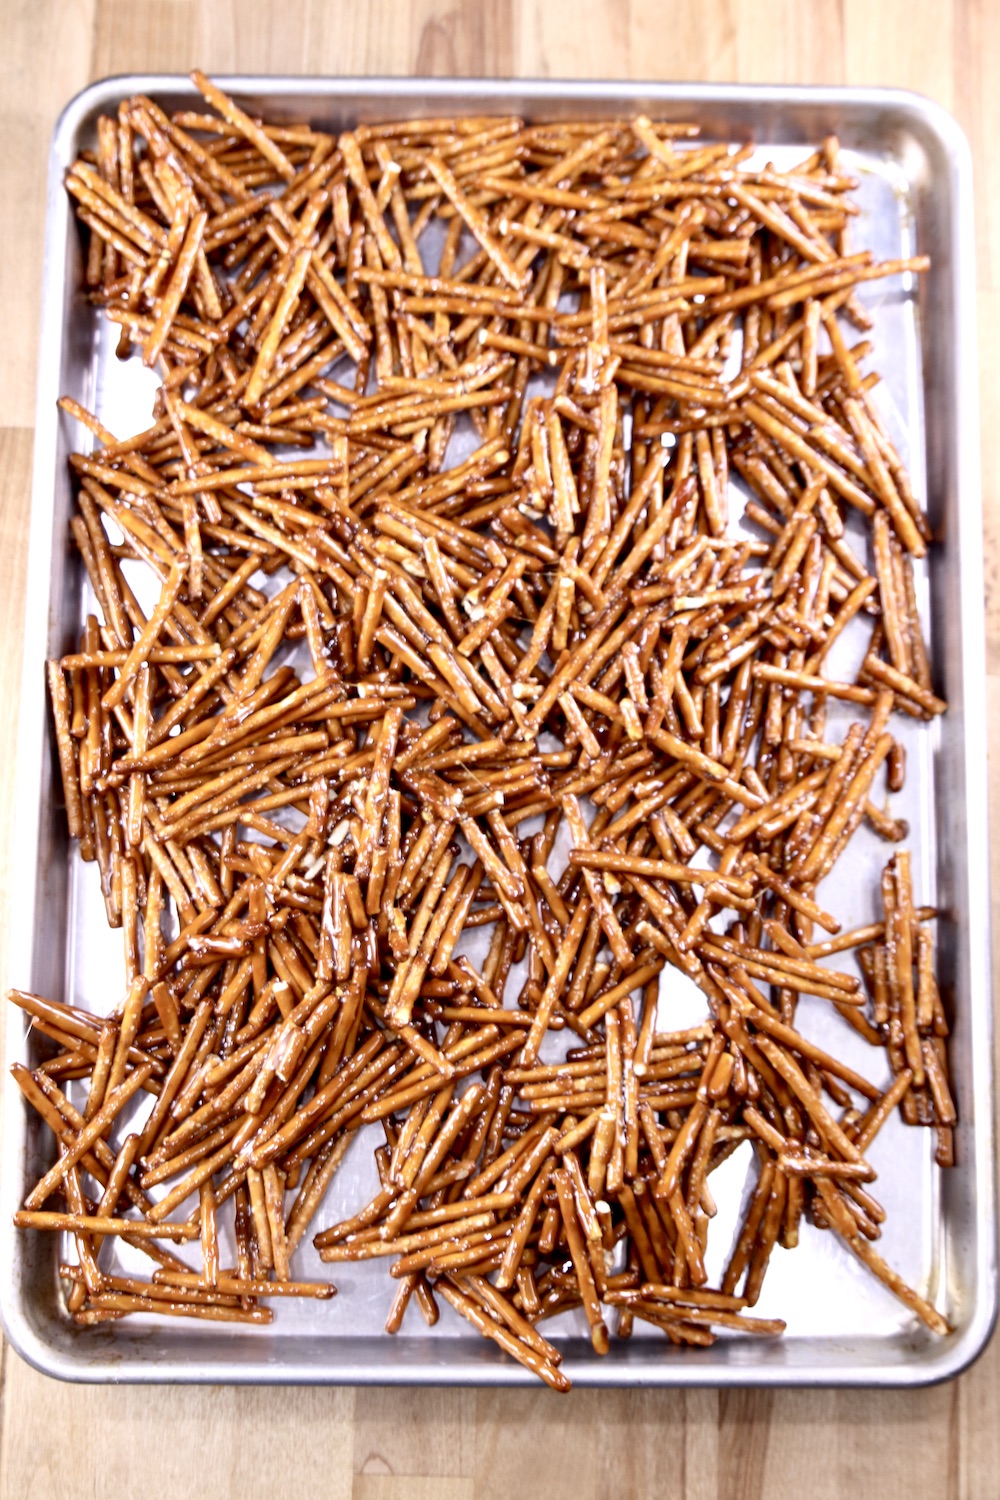 Candied Pretzel sticks spread over a rimmed baking sheet